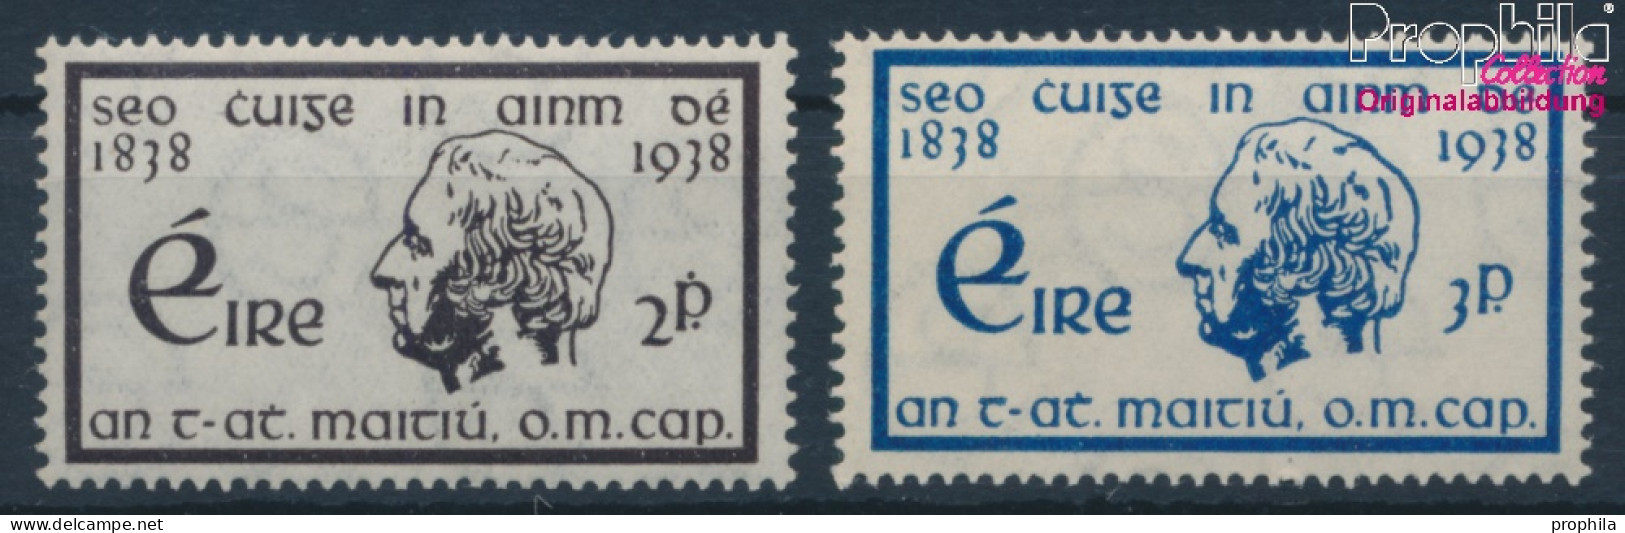 Irland Postfrisch Enthasltsamkeit 1938 Enthaltsamkeit  (10398324 - Ongebruikt